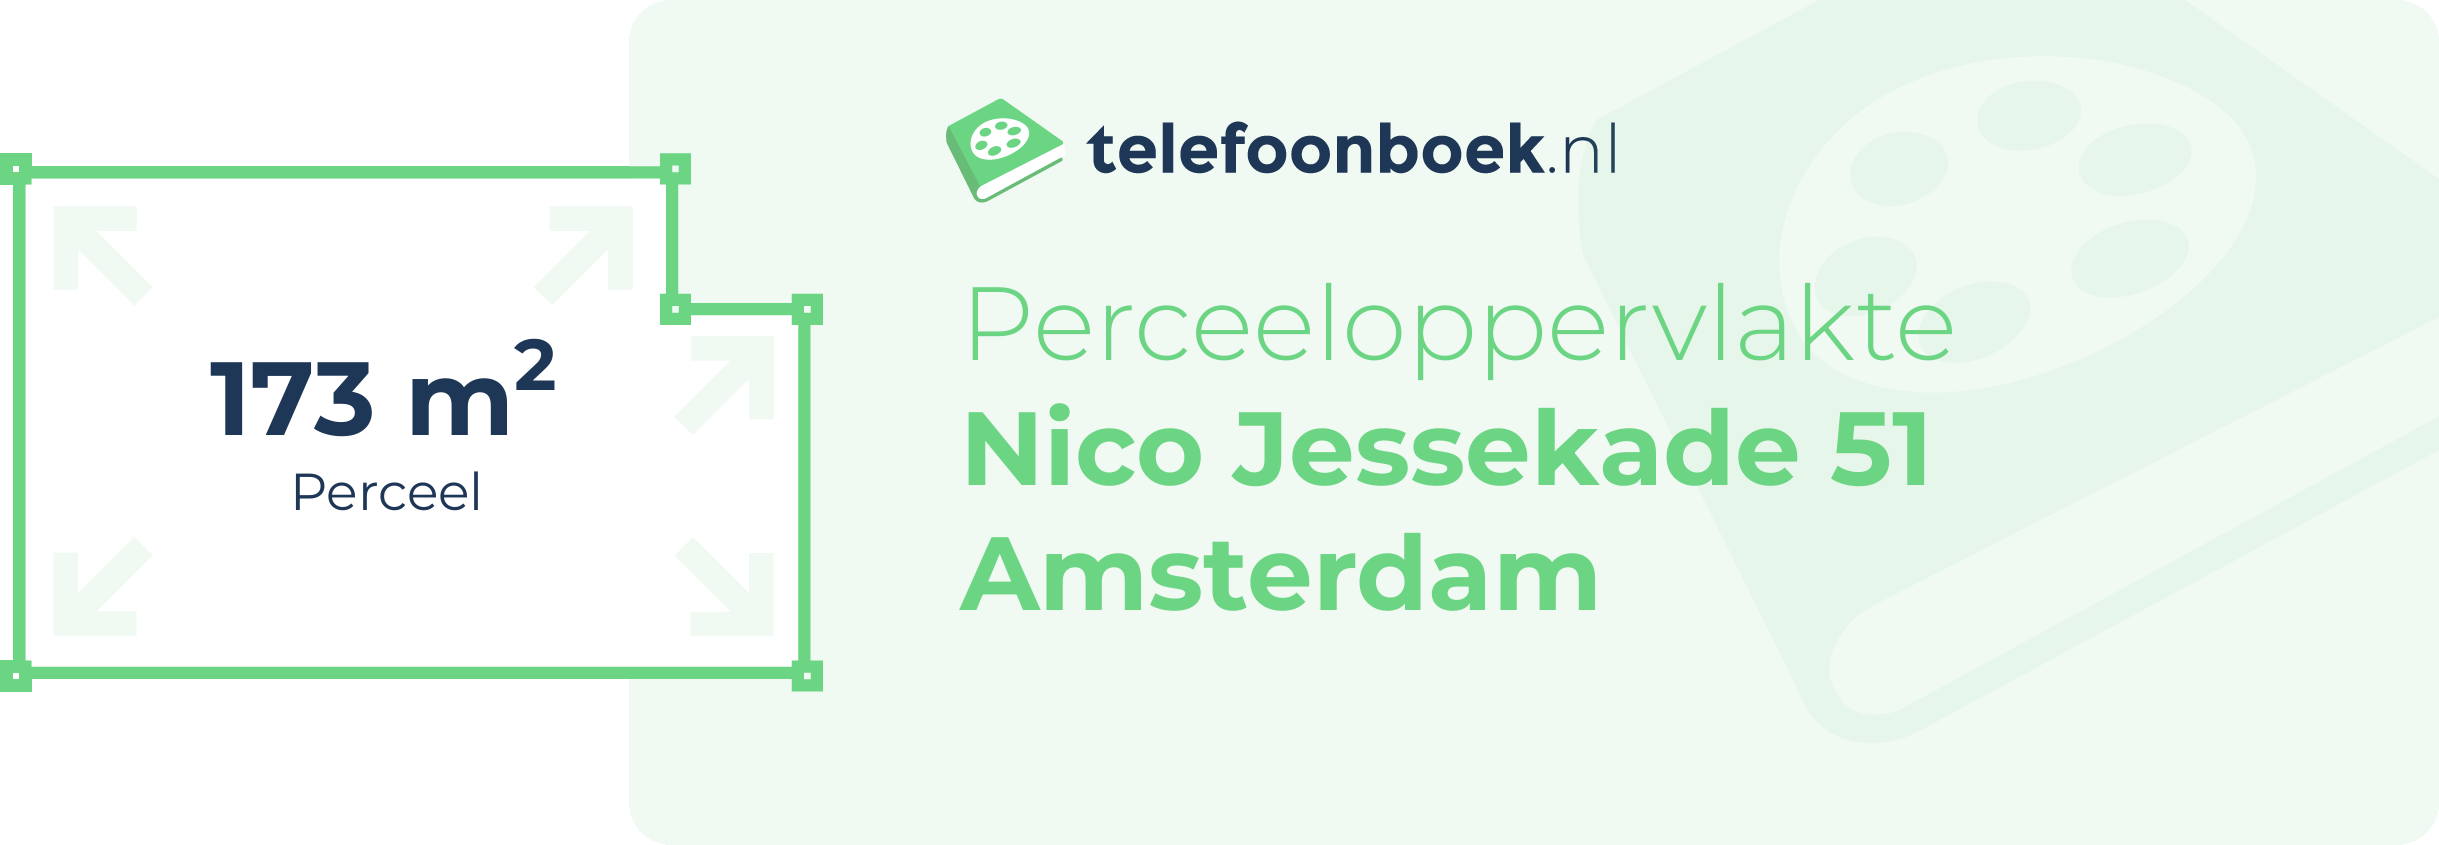 Perceeloppervlakte Nico Jessekade 51 Amsterdam